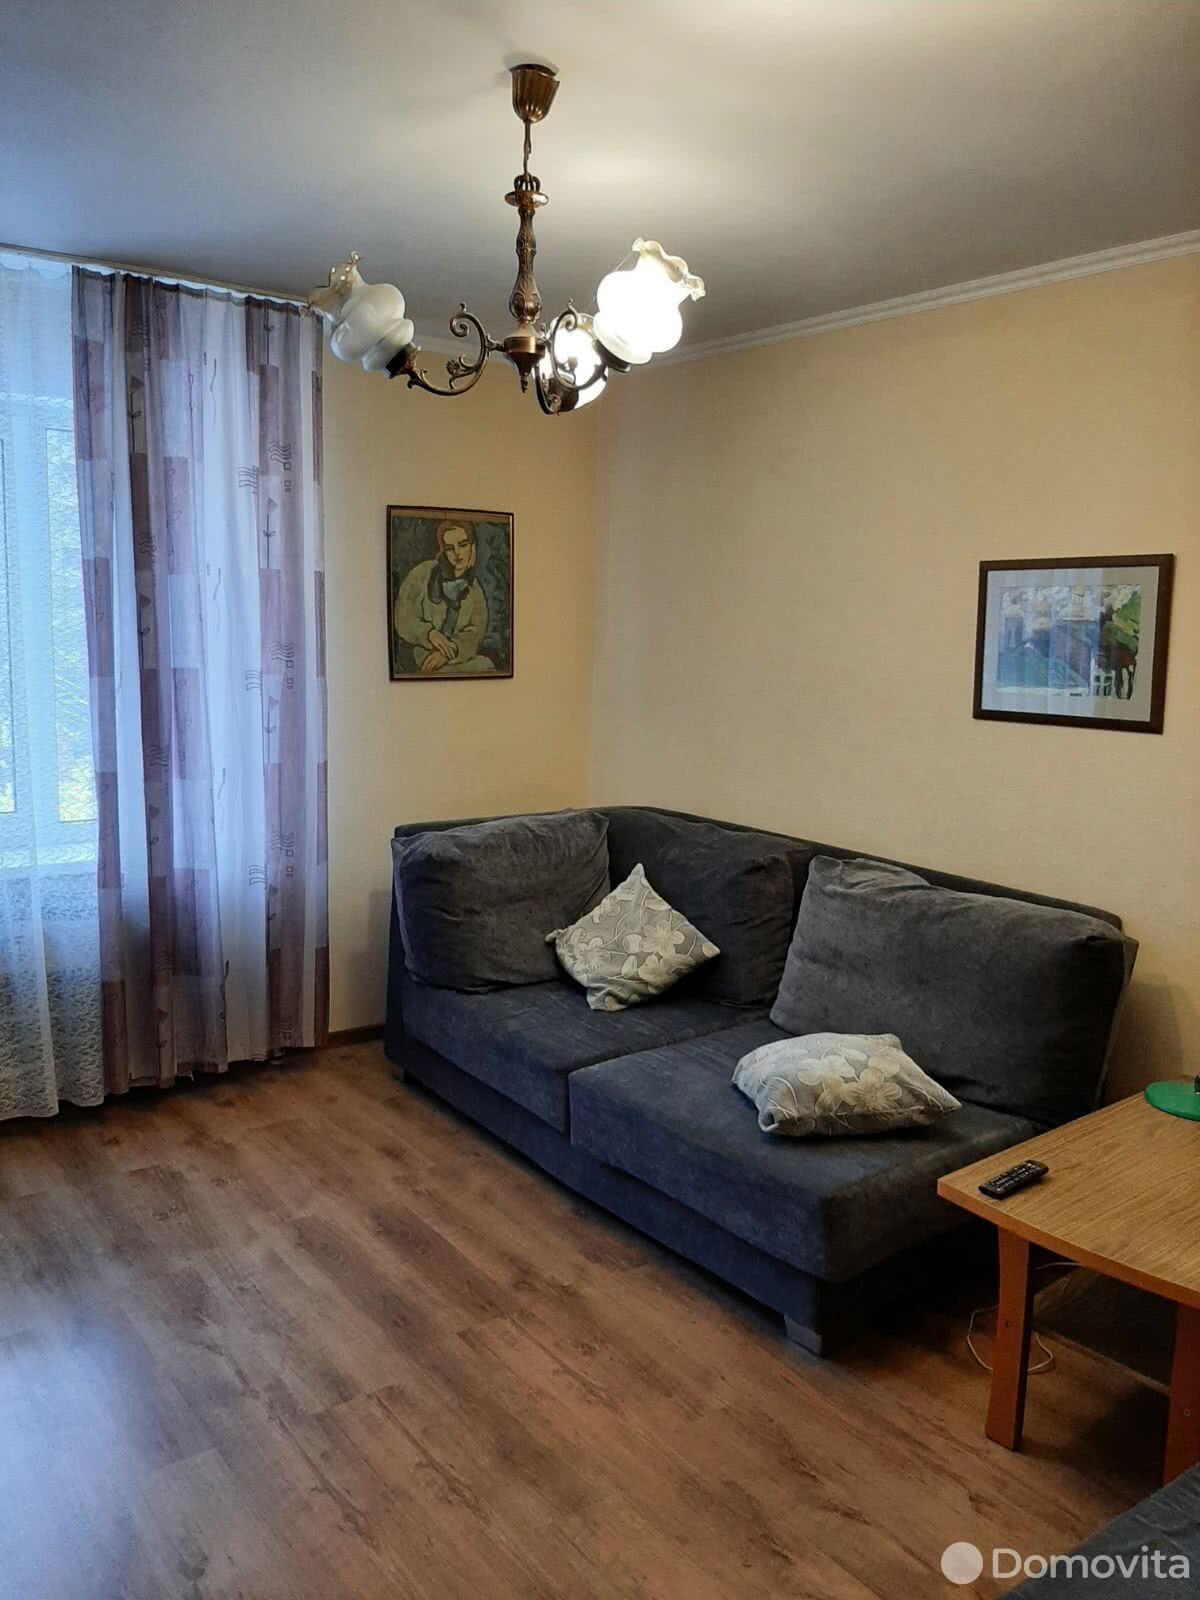 Цена продажи квартиры, Витебск, ул. Чкалова, д. 47